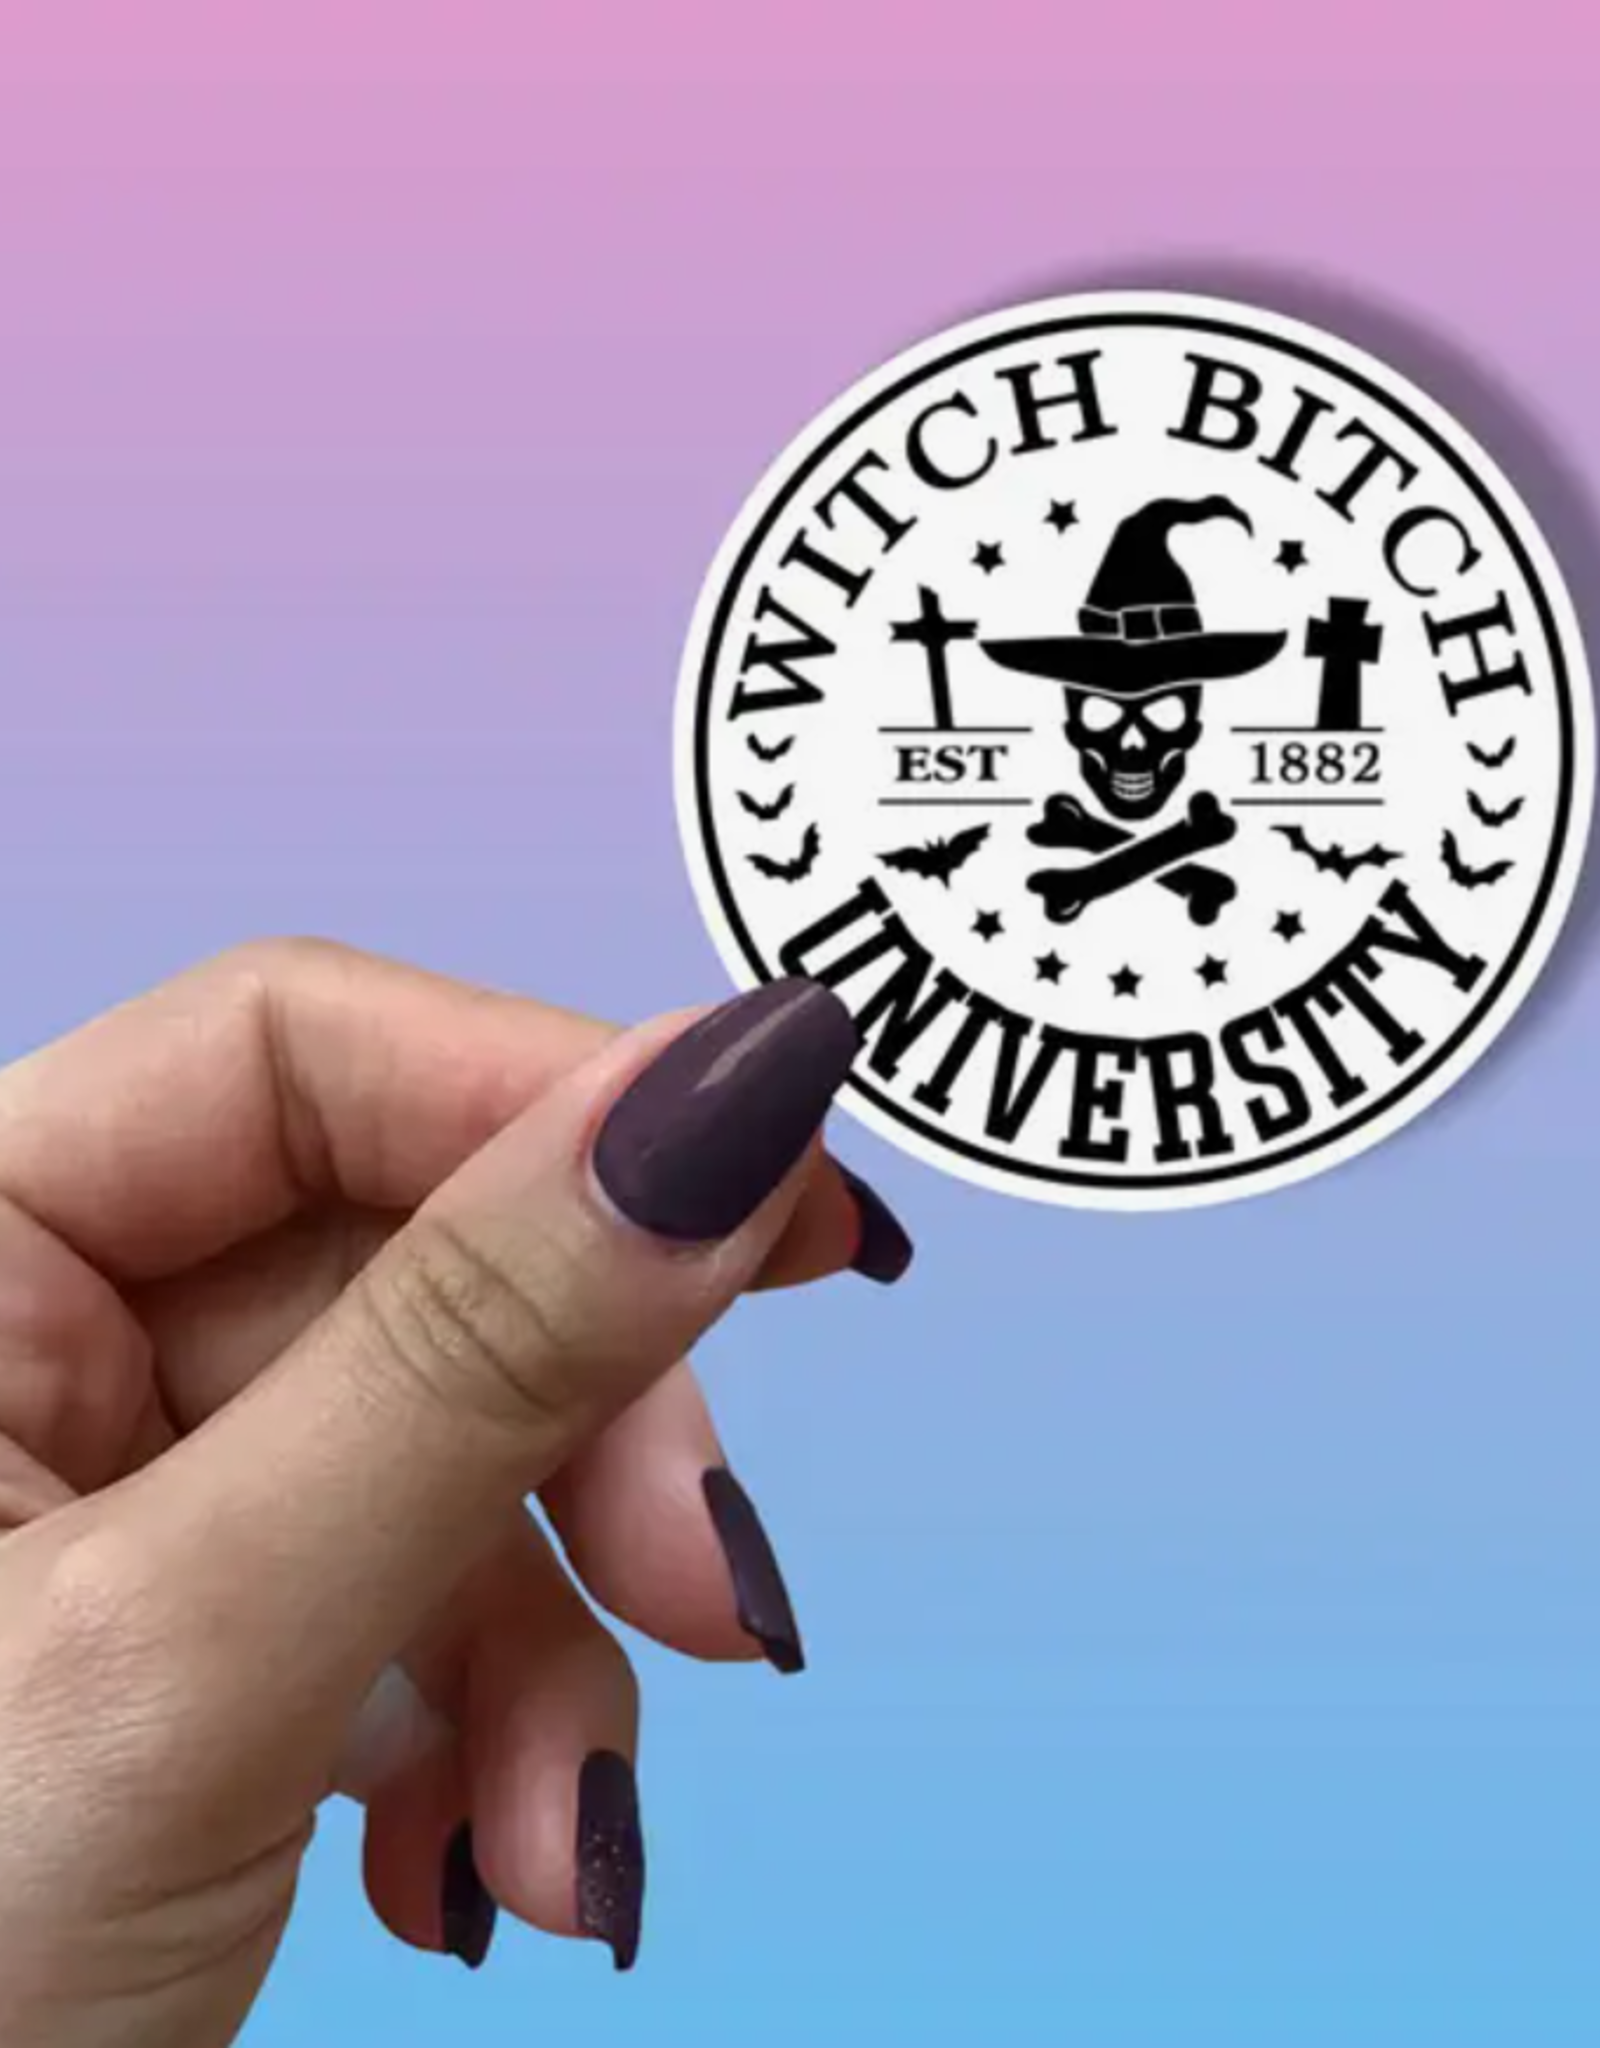 Witch Bitch University Sticker Metaphysical Intention